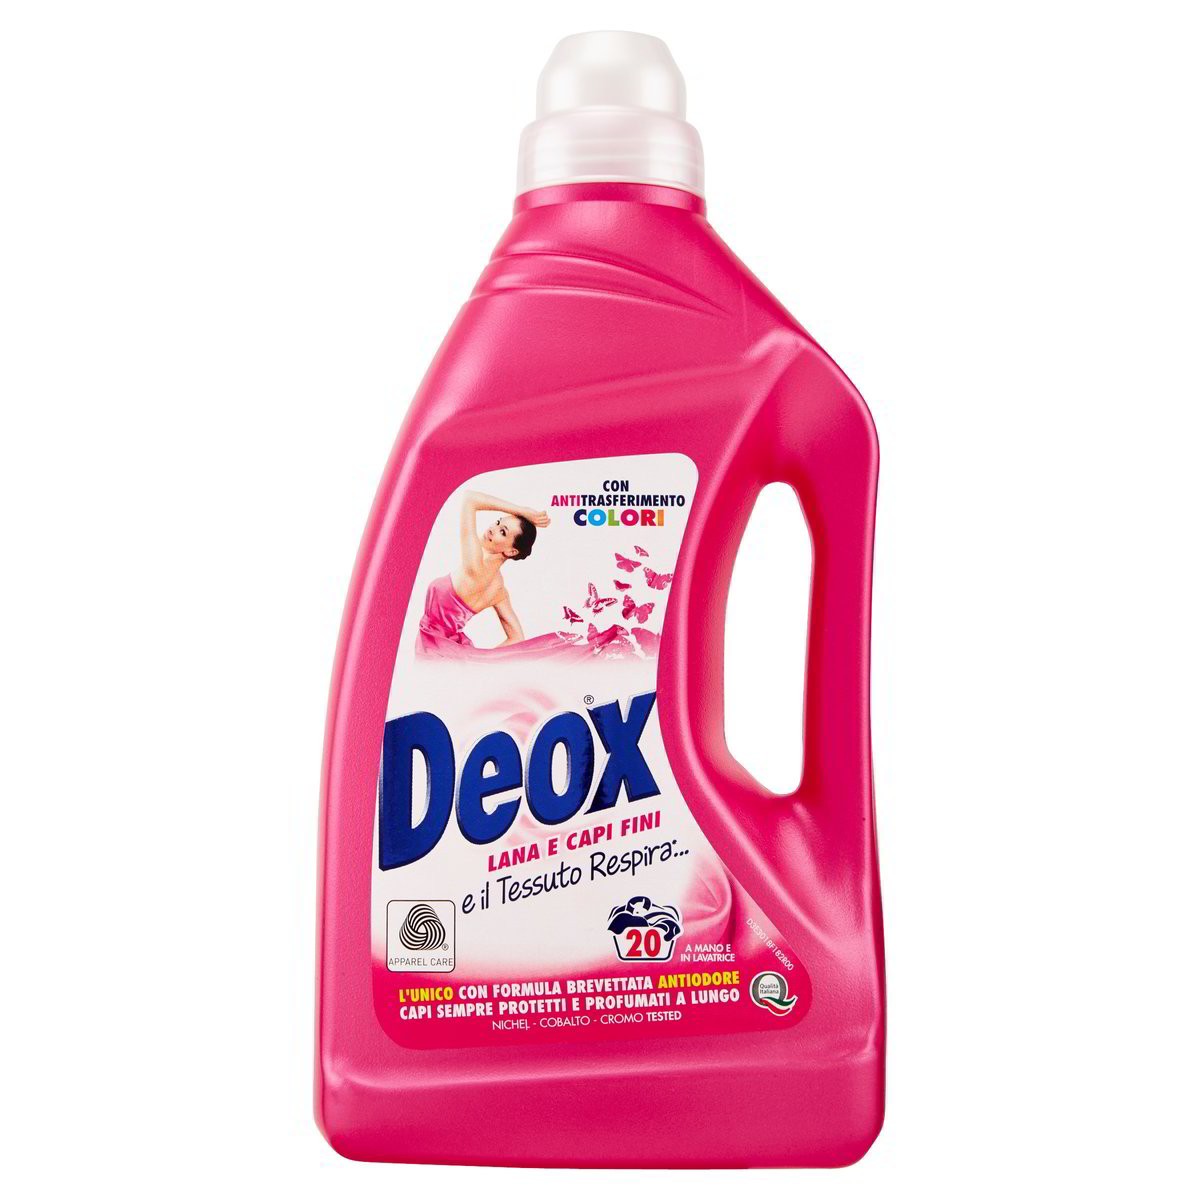 Deox Detersivo per lavatrice liquido